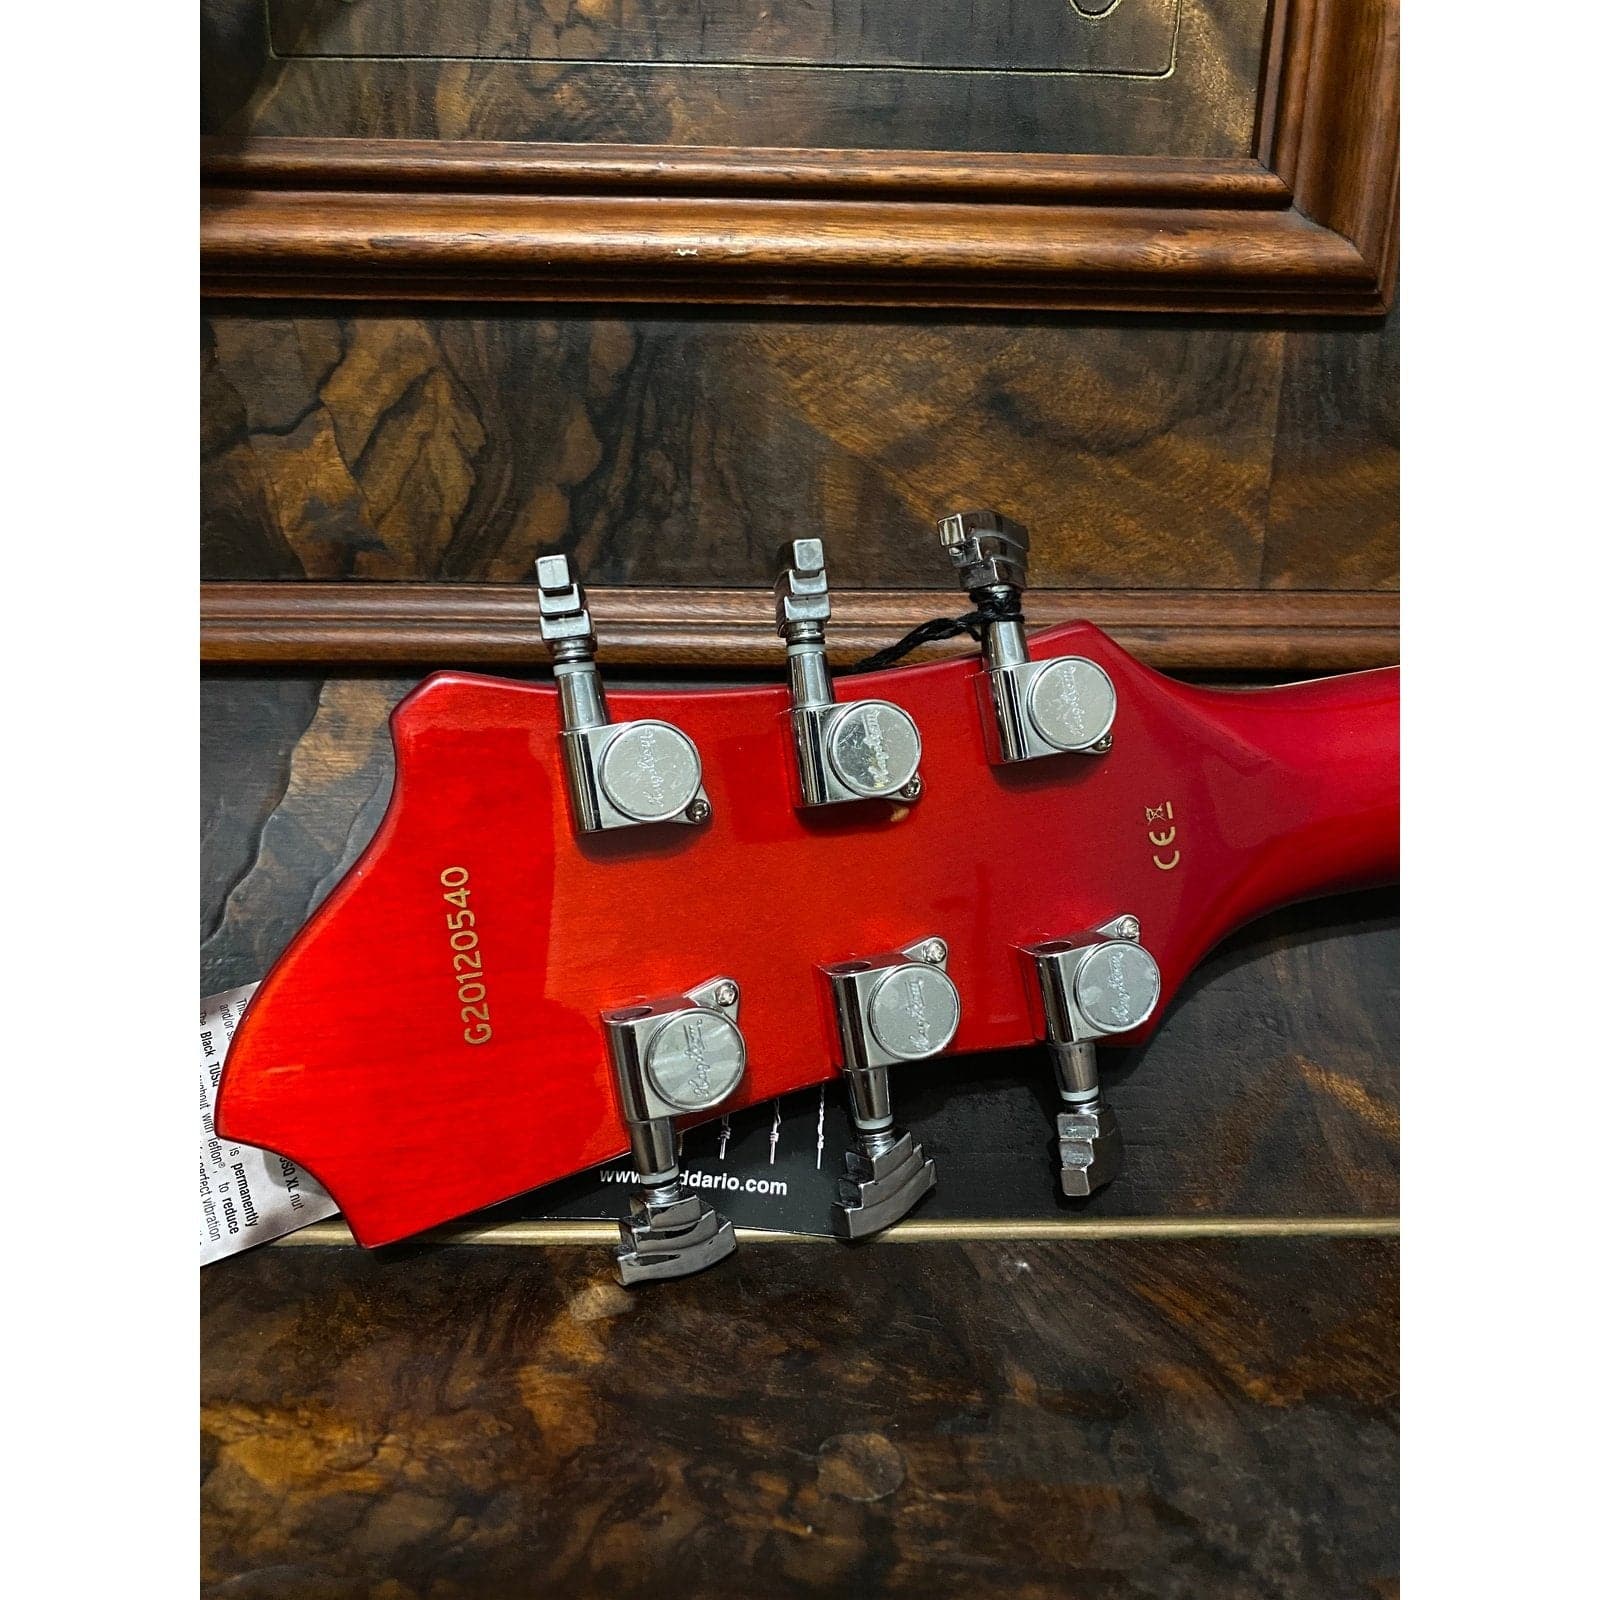 Hagstrom Alvar Semi-Hollow Guitar in Wild Cherry Transparent Gloss